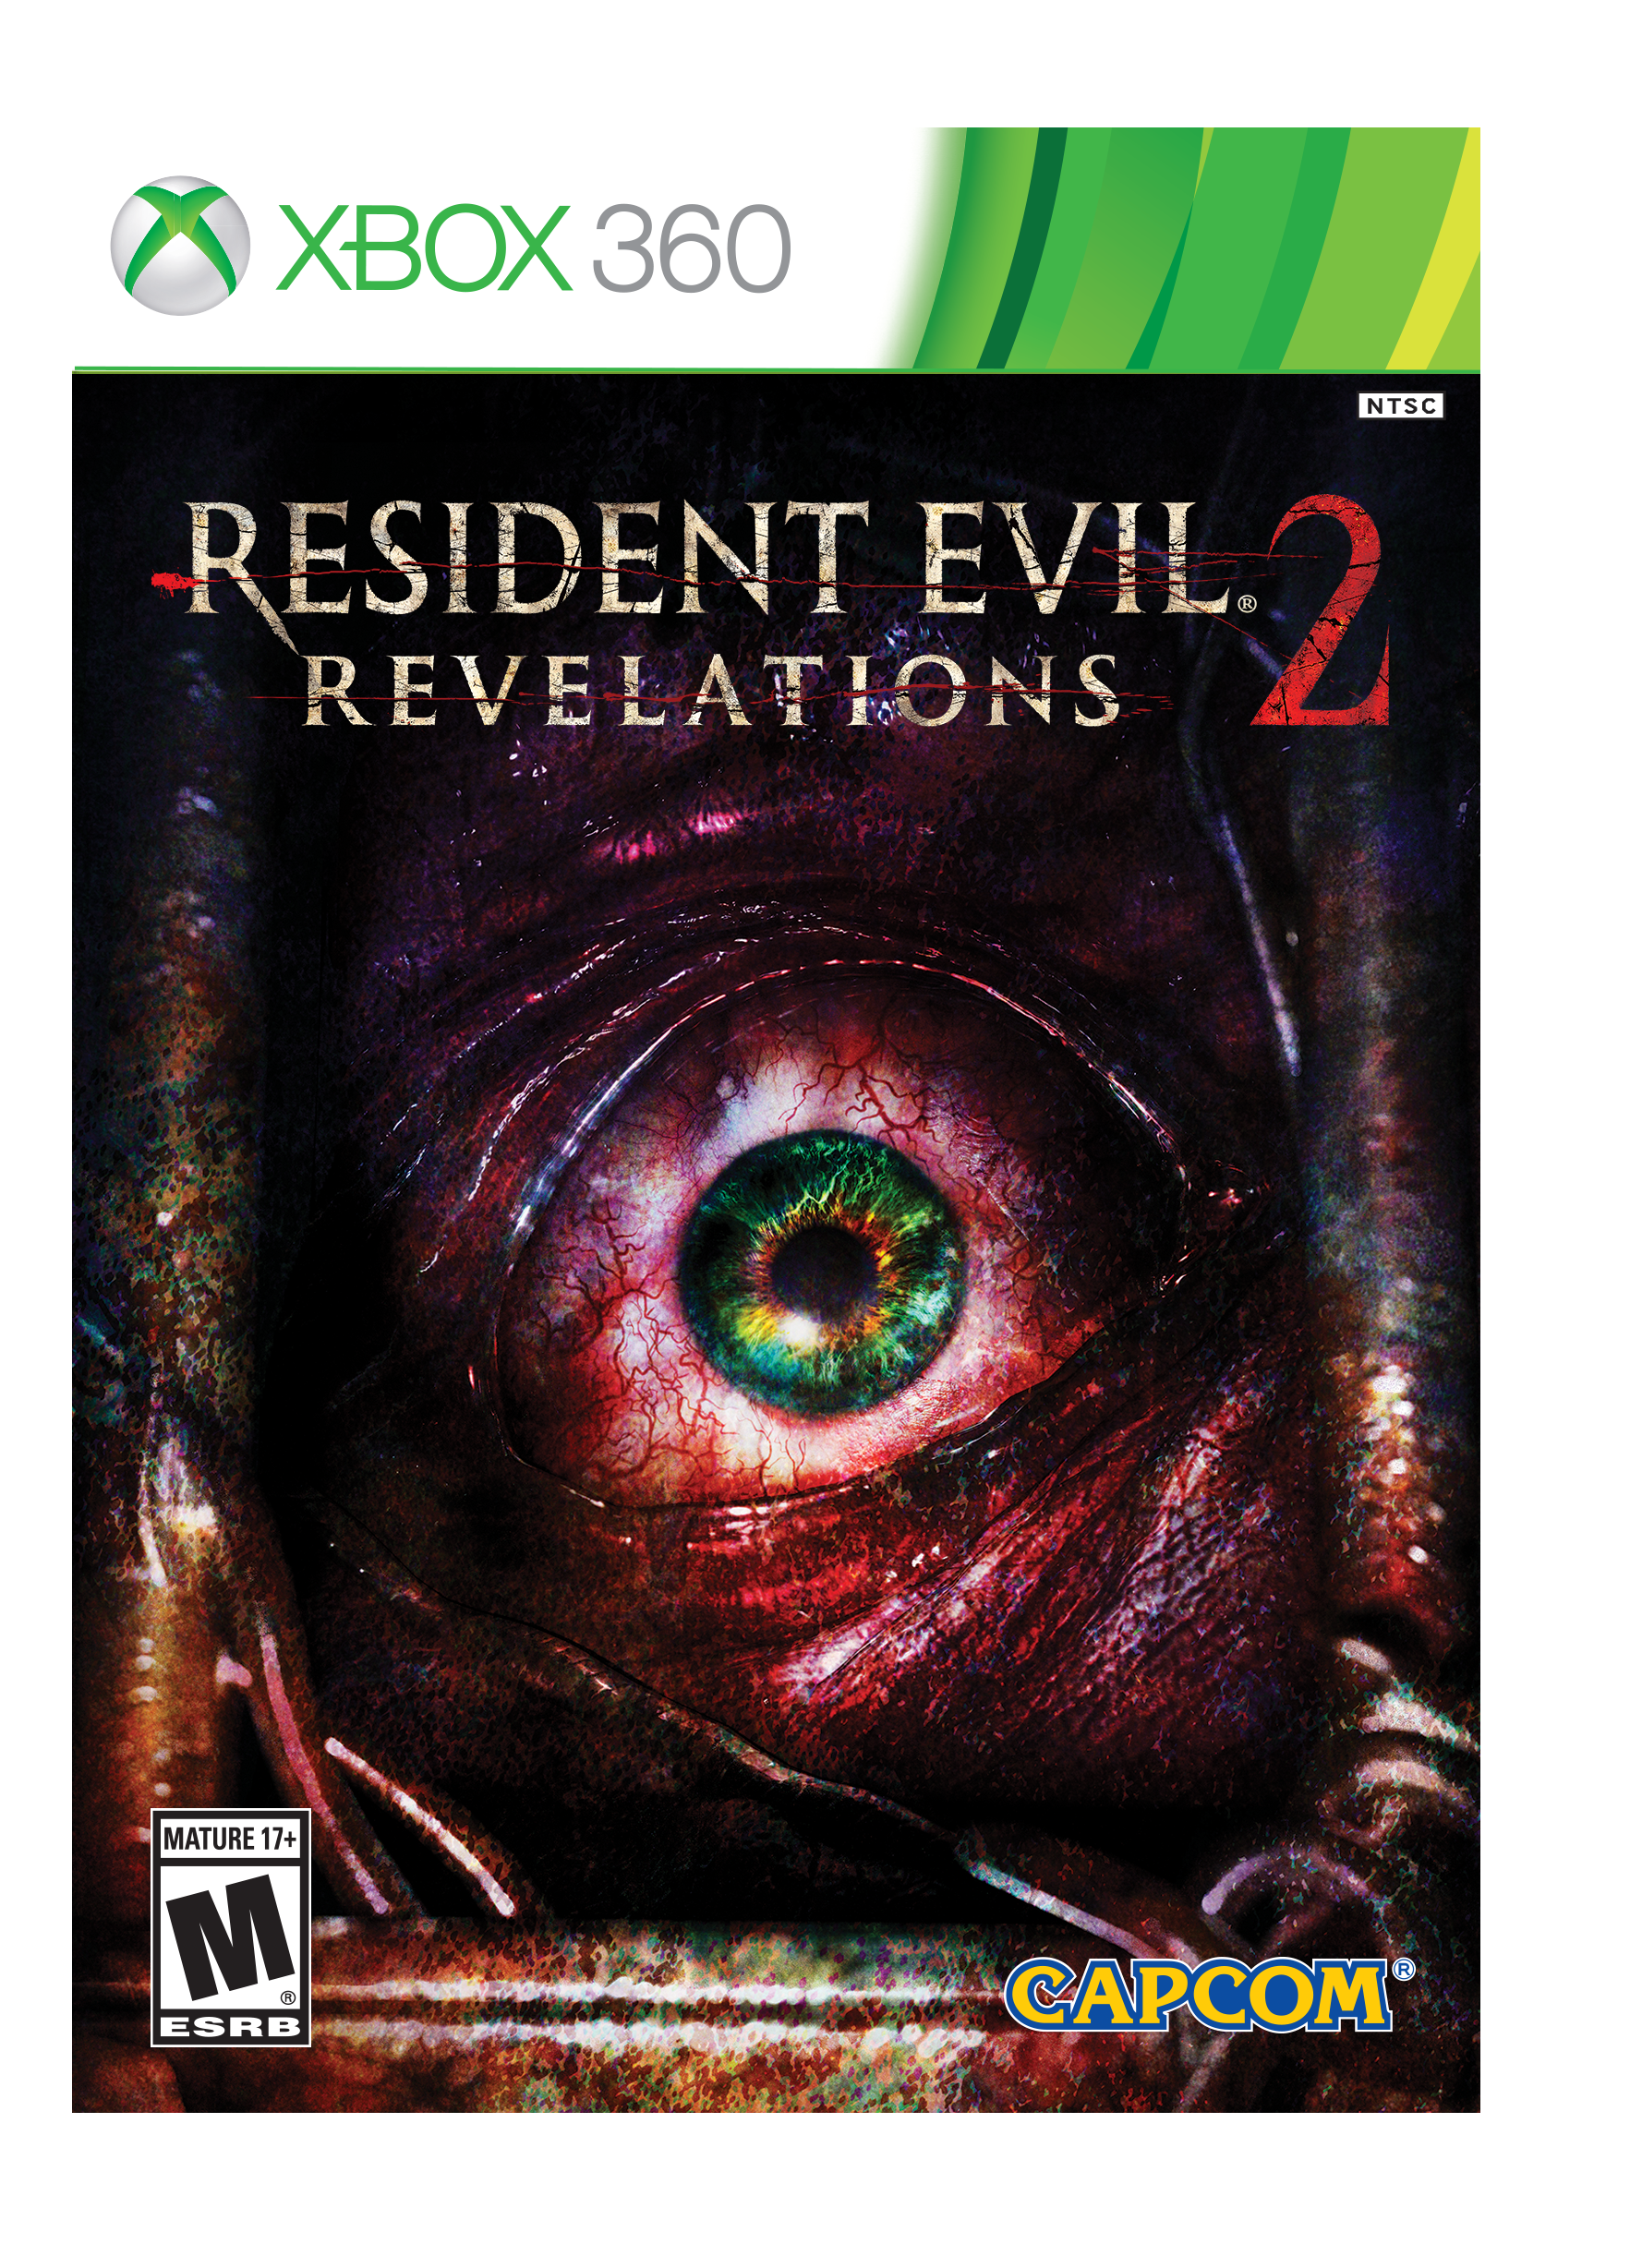 Resident Evil Revelations 2 - Xbox 360 | Capcom | GameStop